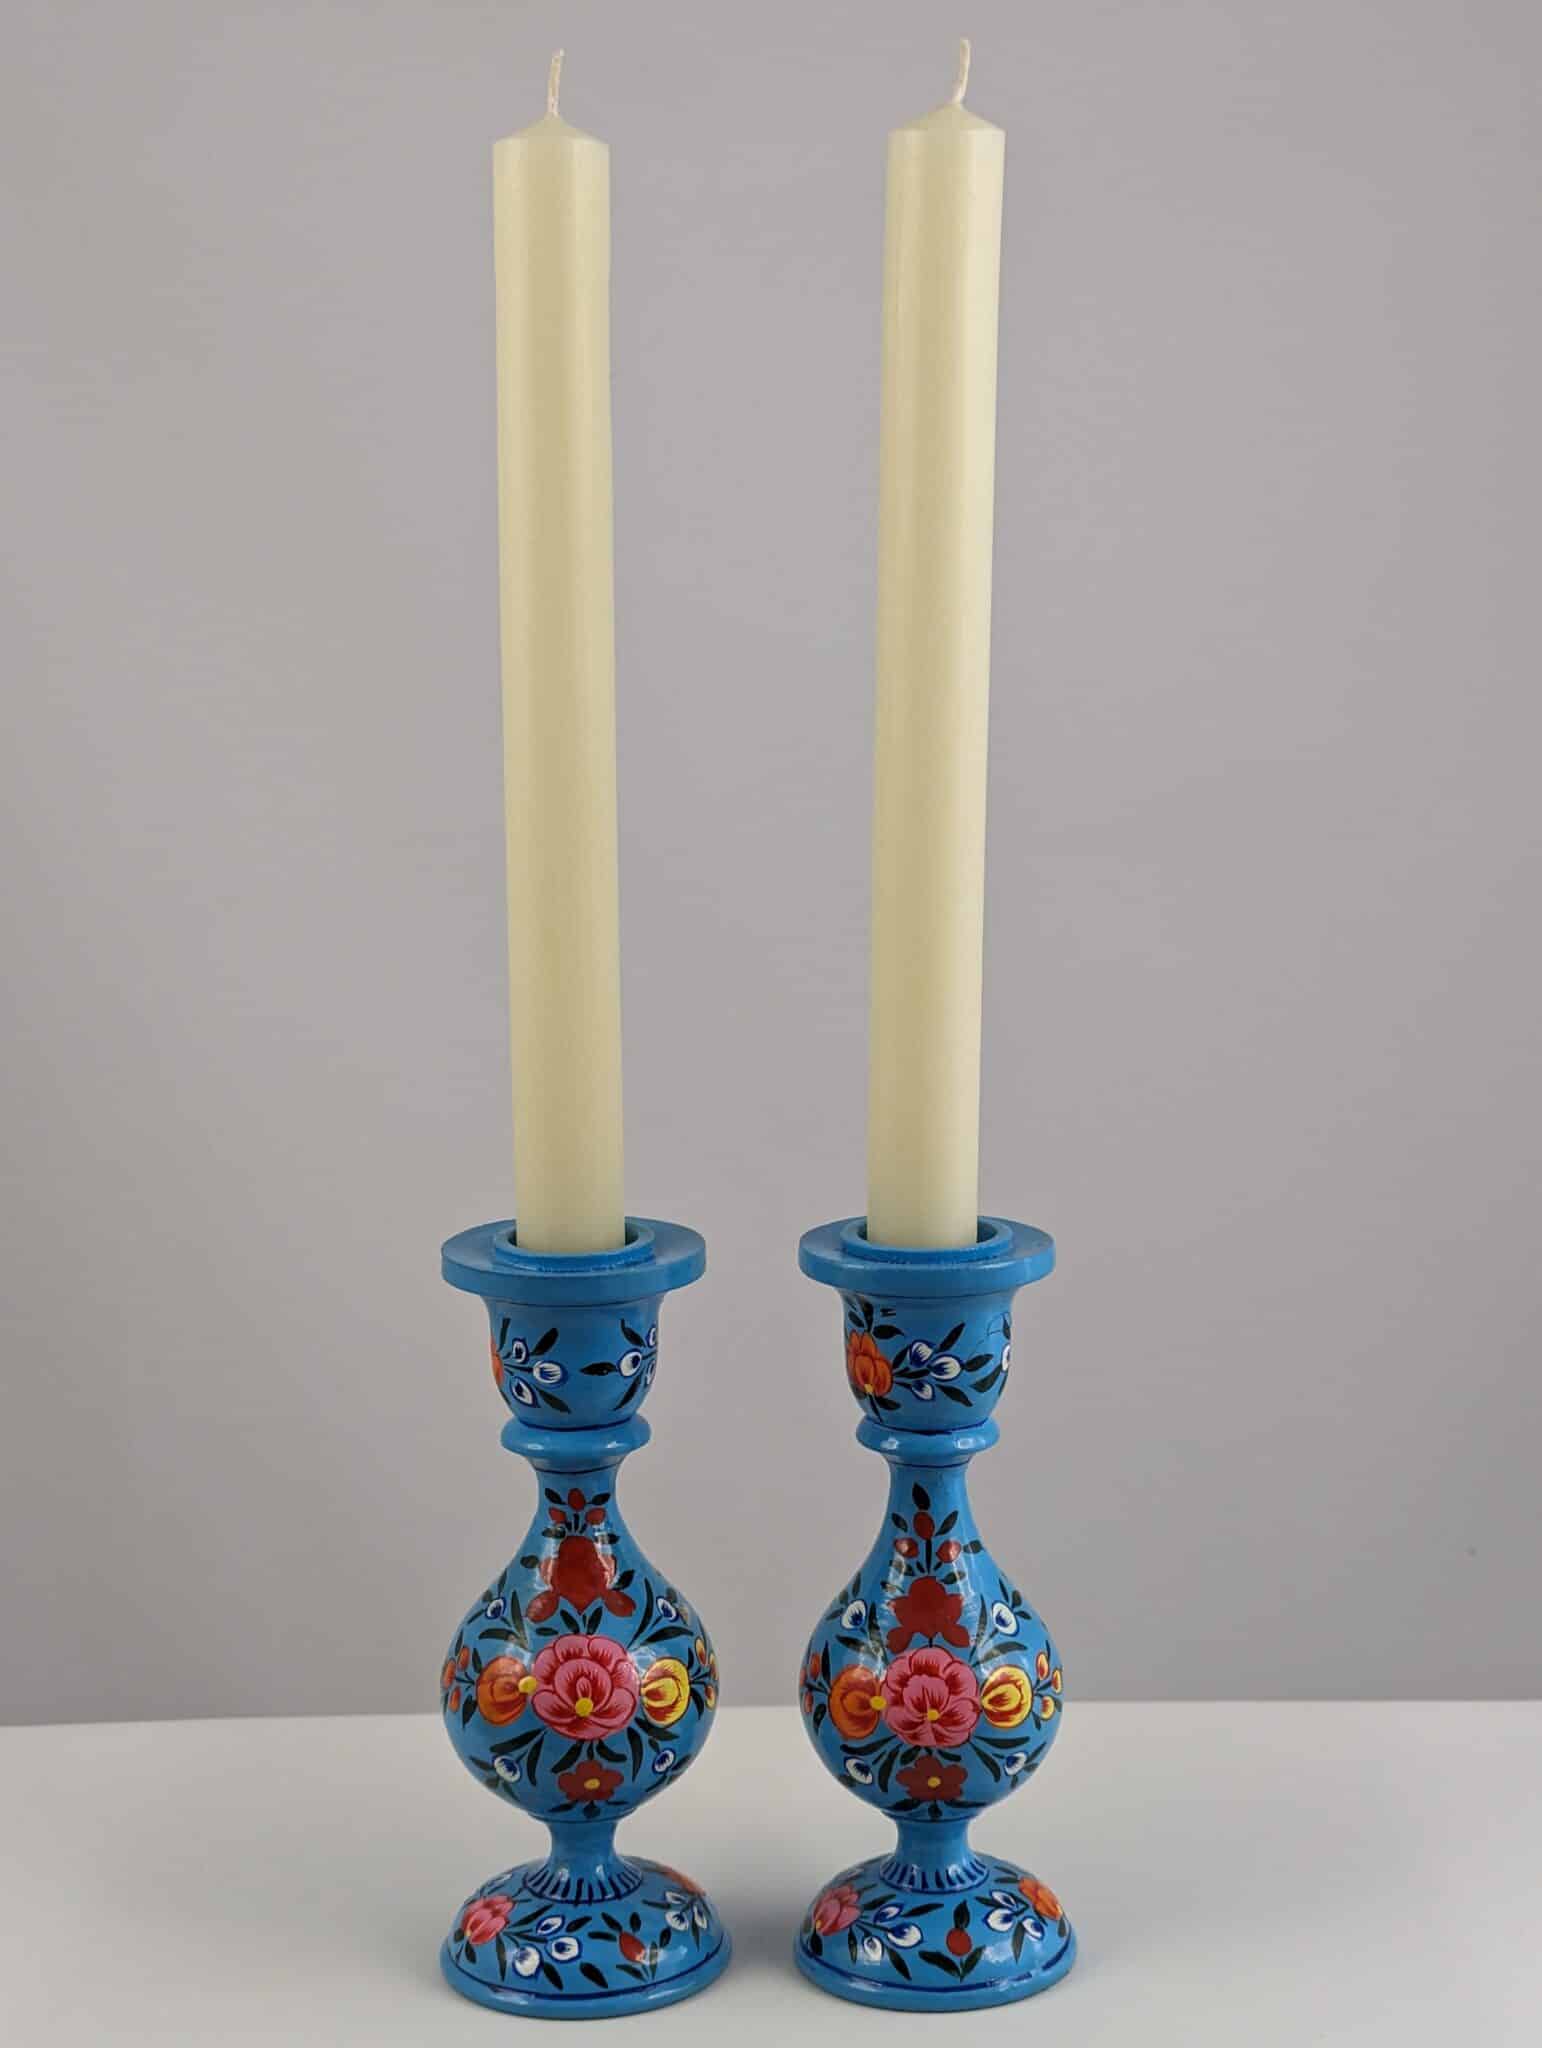 Handcrafted Wooden Candlesticks - Blue